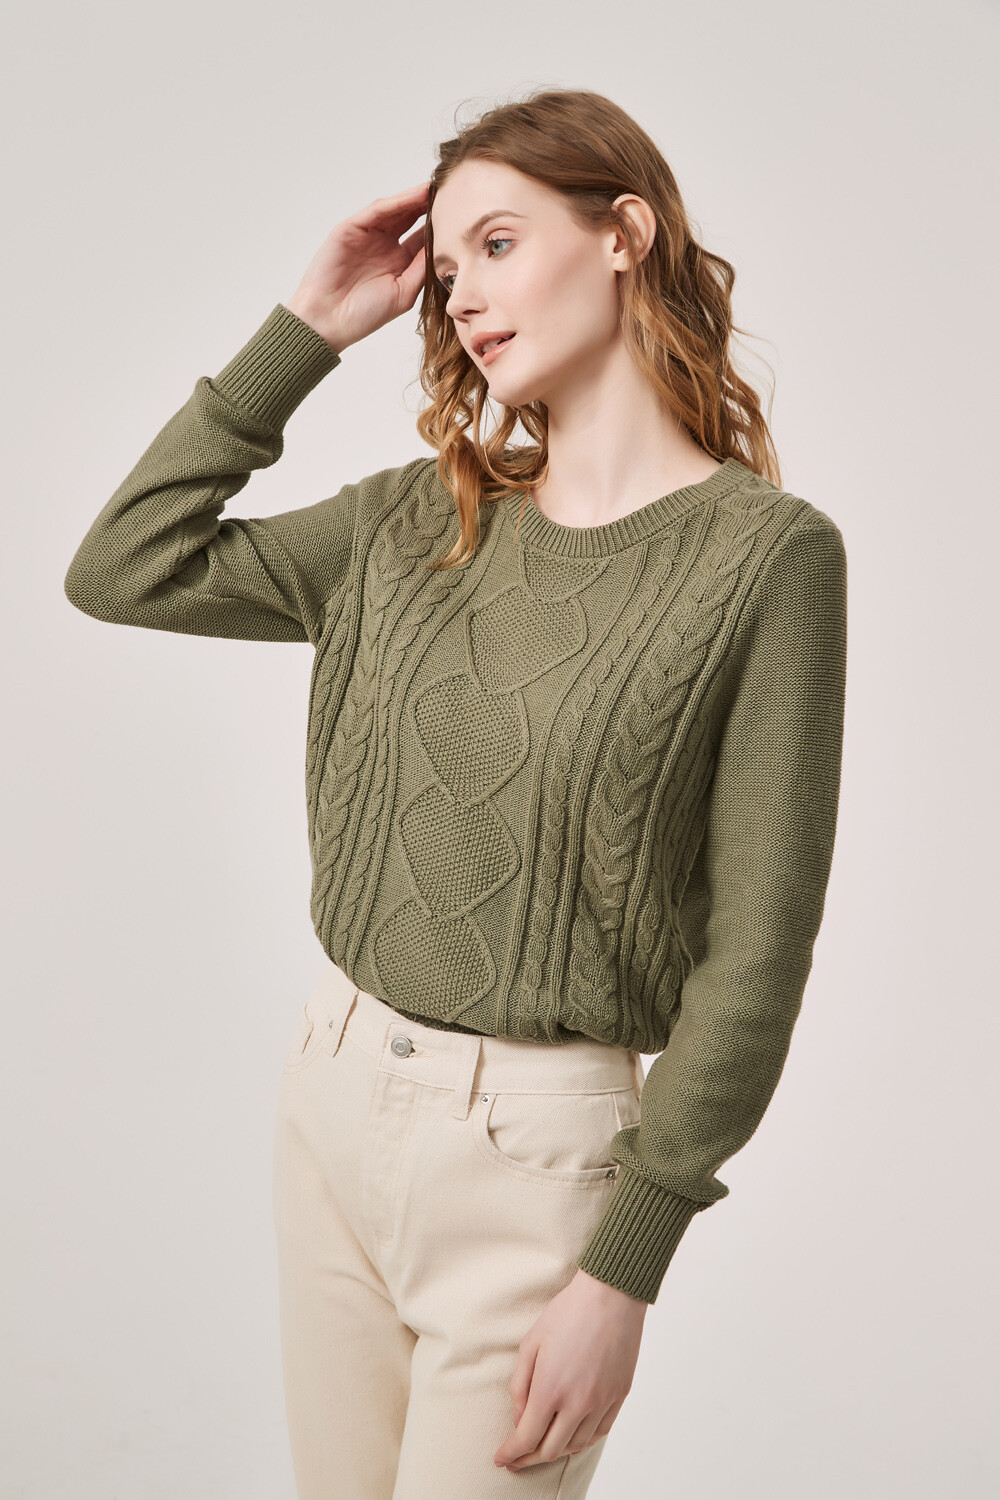 Sweater Aspasia Verde Seco